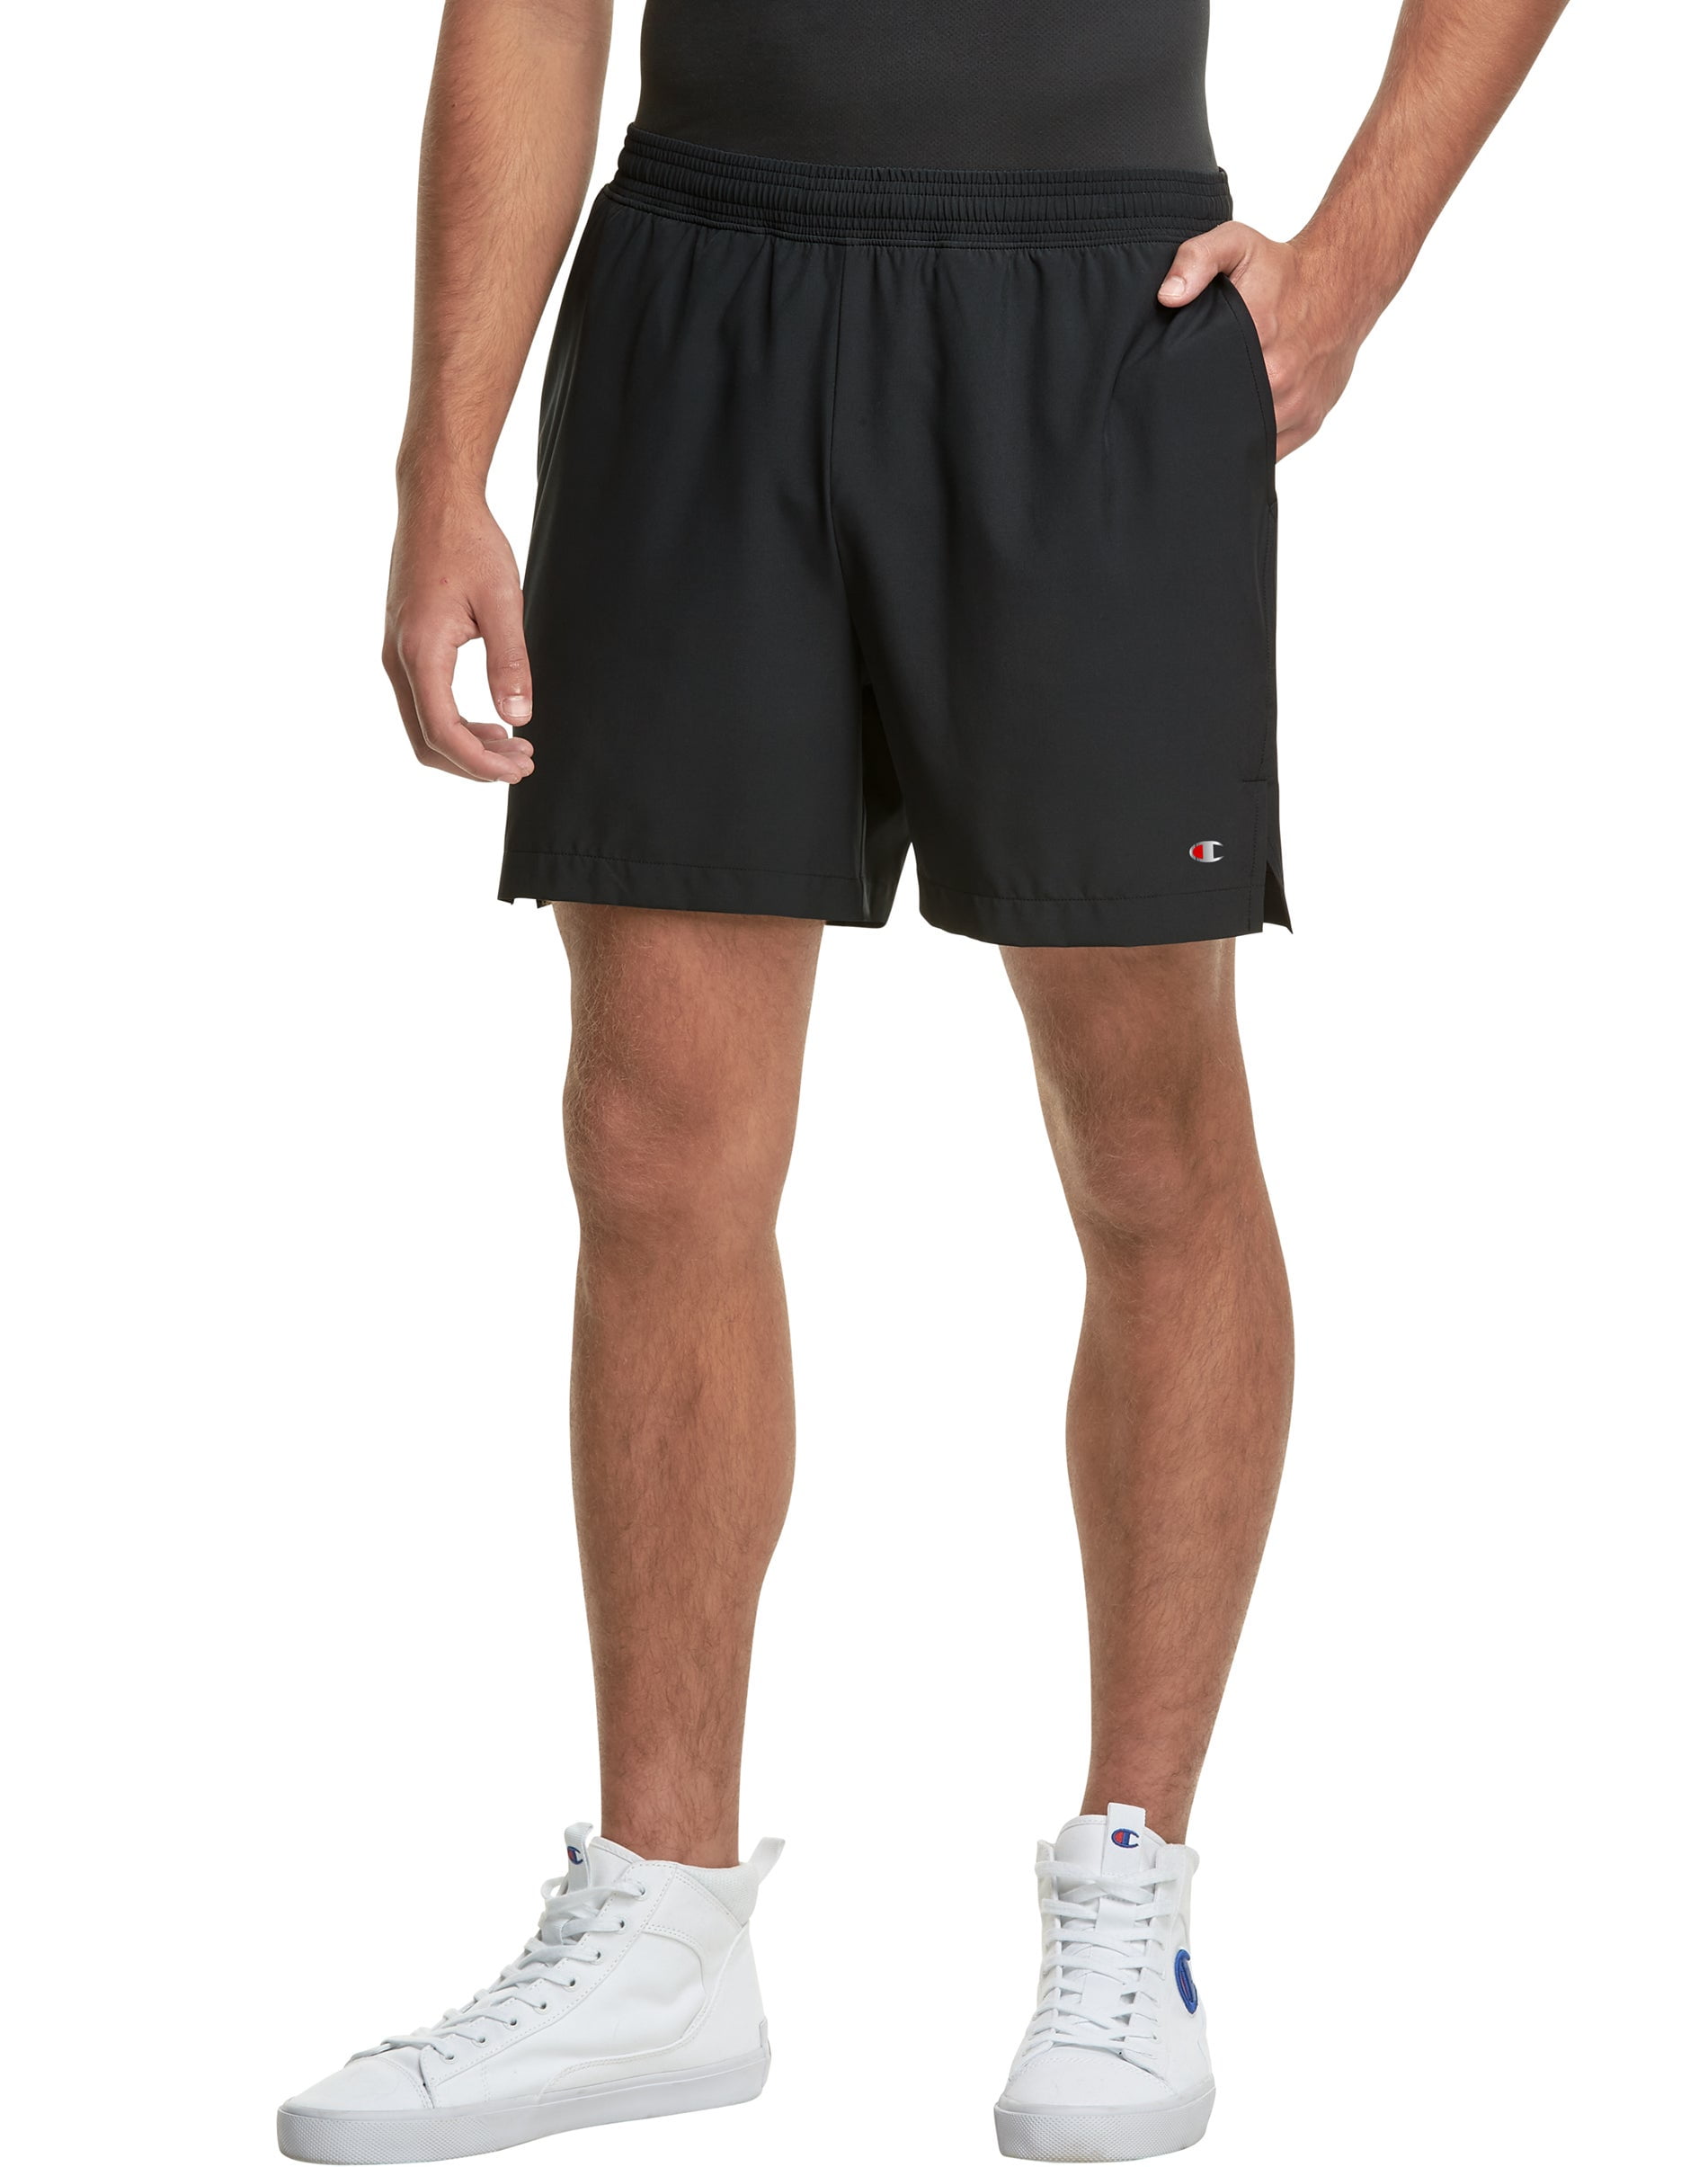 PTSports Mens Basketball Gym Shorts Running Workout Shorts with Pockets & Drawstring 14 Inch Inseam